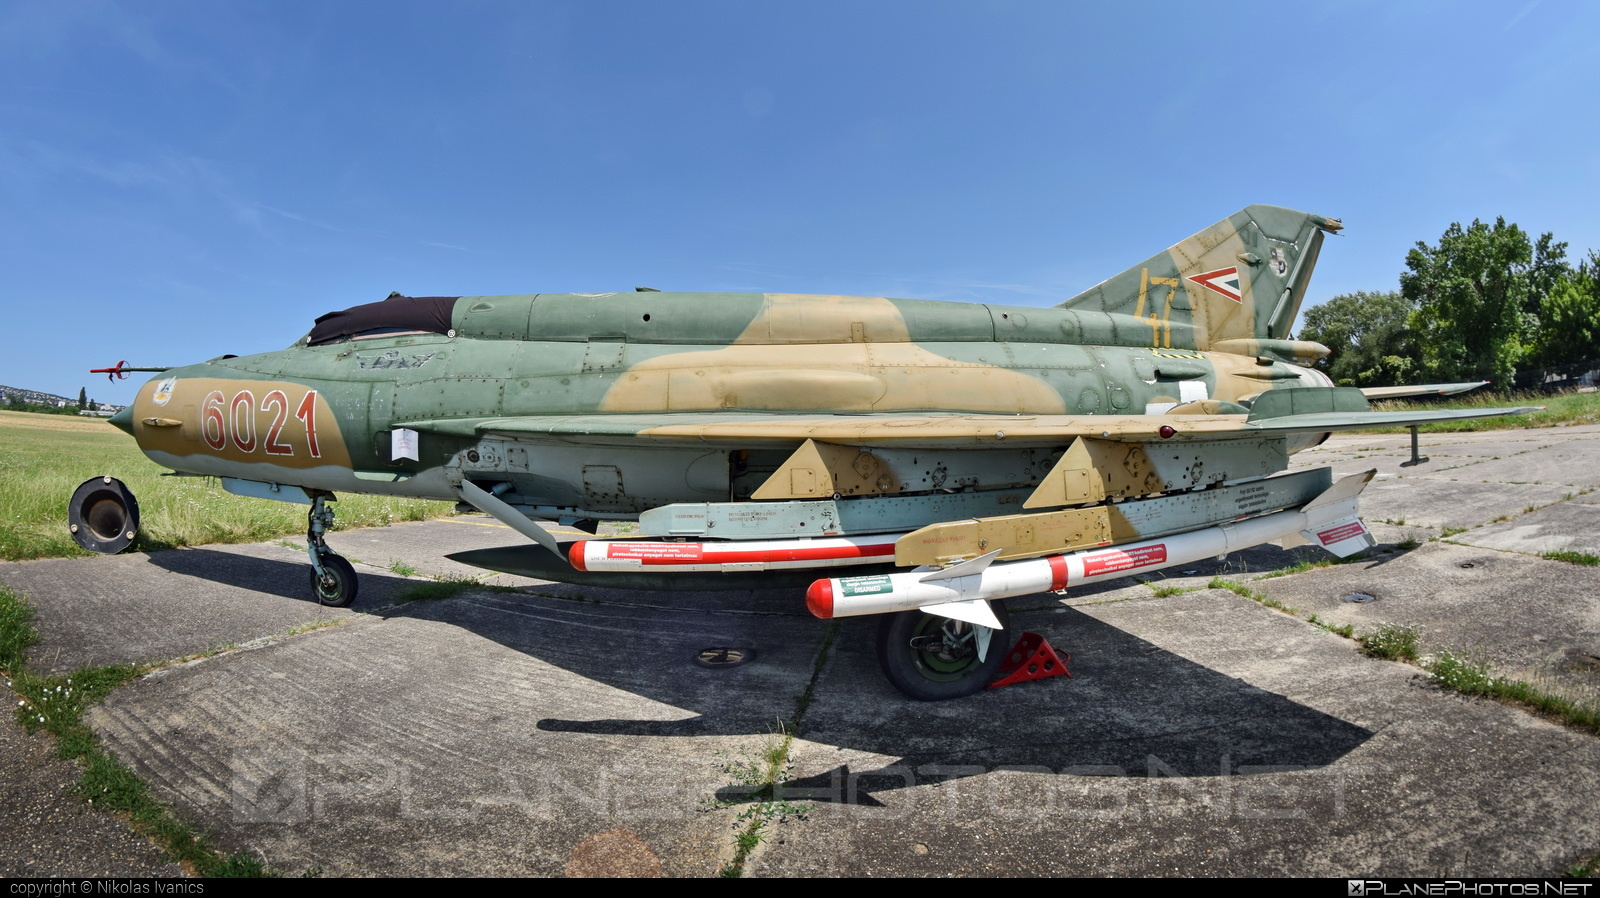 Mikoyan-Gurevich MiG-21bis - 6021 operated by Magyar Légierő (Hungarian Air Force) #hungarianairforce #magyarlegiero #mig #mig21 #mig21bis #mikoyangurevich